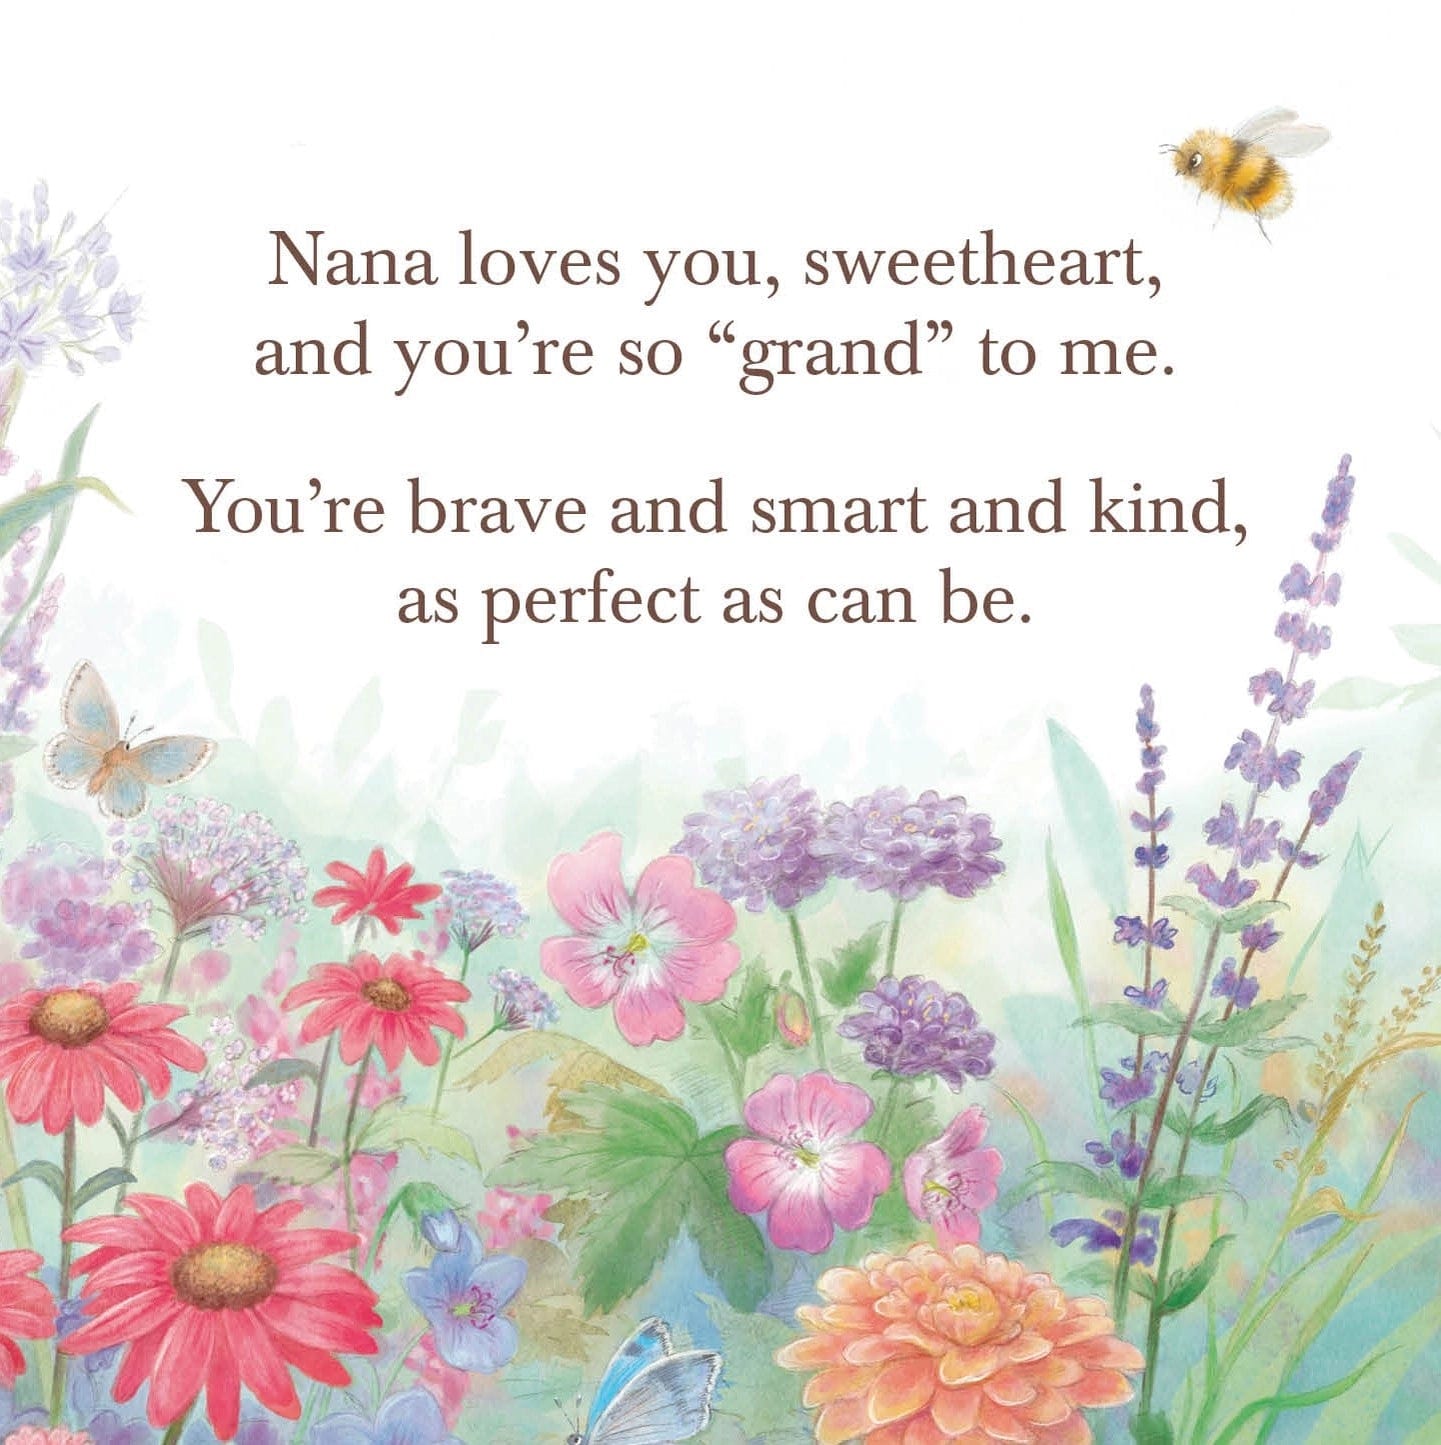 Nana Loves You, Sleepyhead Sleeping Bear Press Lil Tulips